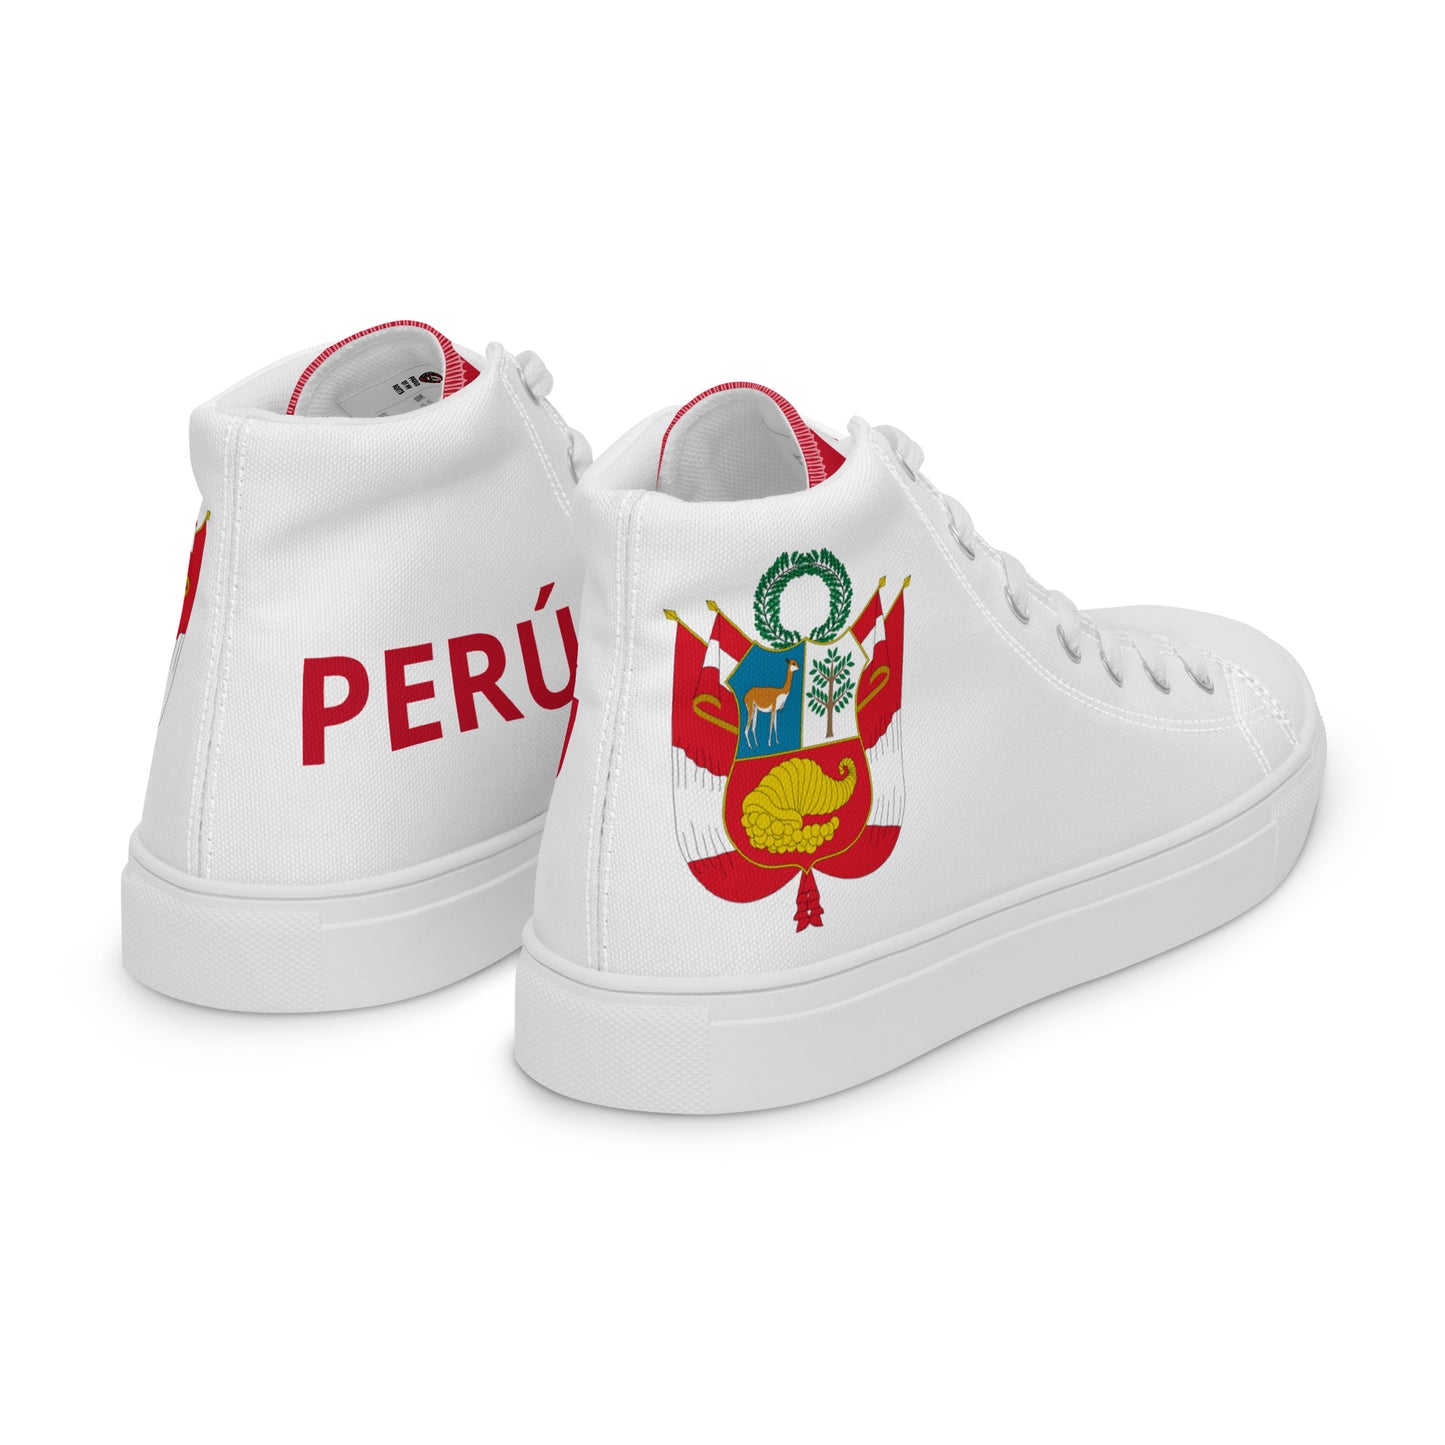 Perú - Men - White - High top shoes